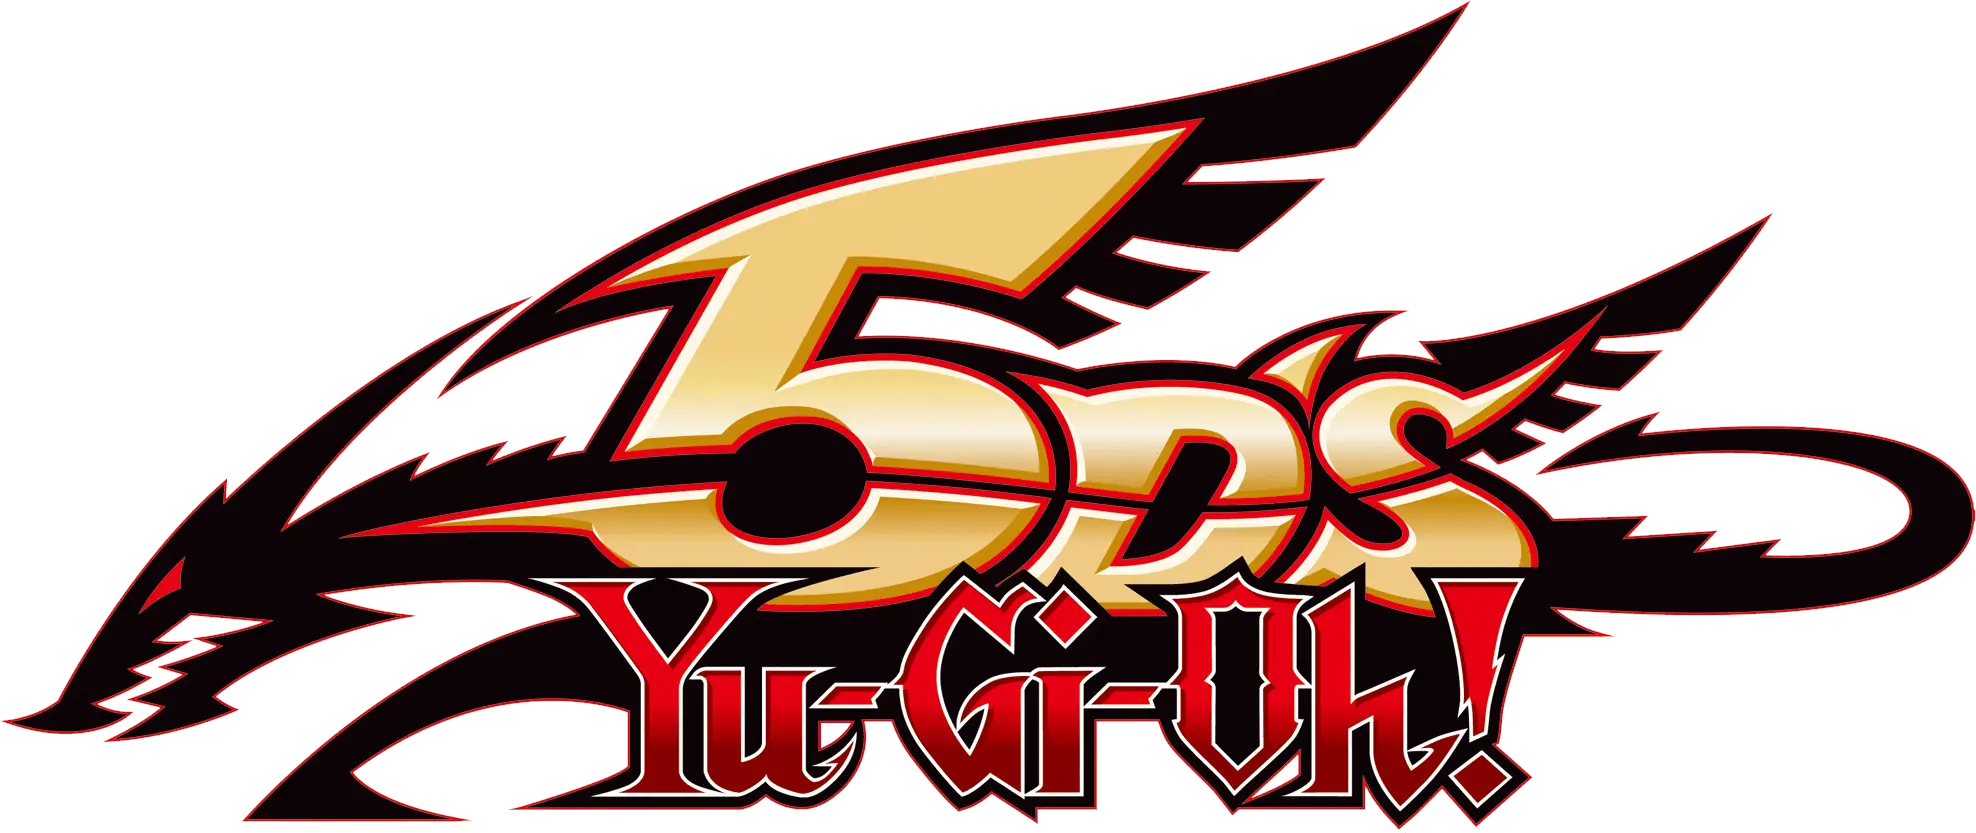 Yu-Gi-Oh! World Championship 2008 (DS) walkthrough - Otohime 